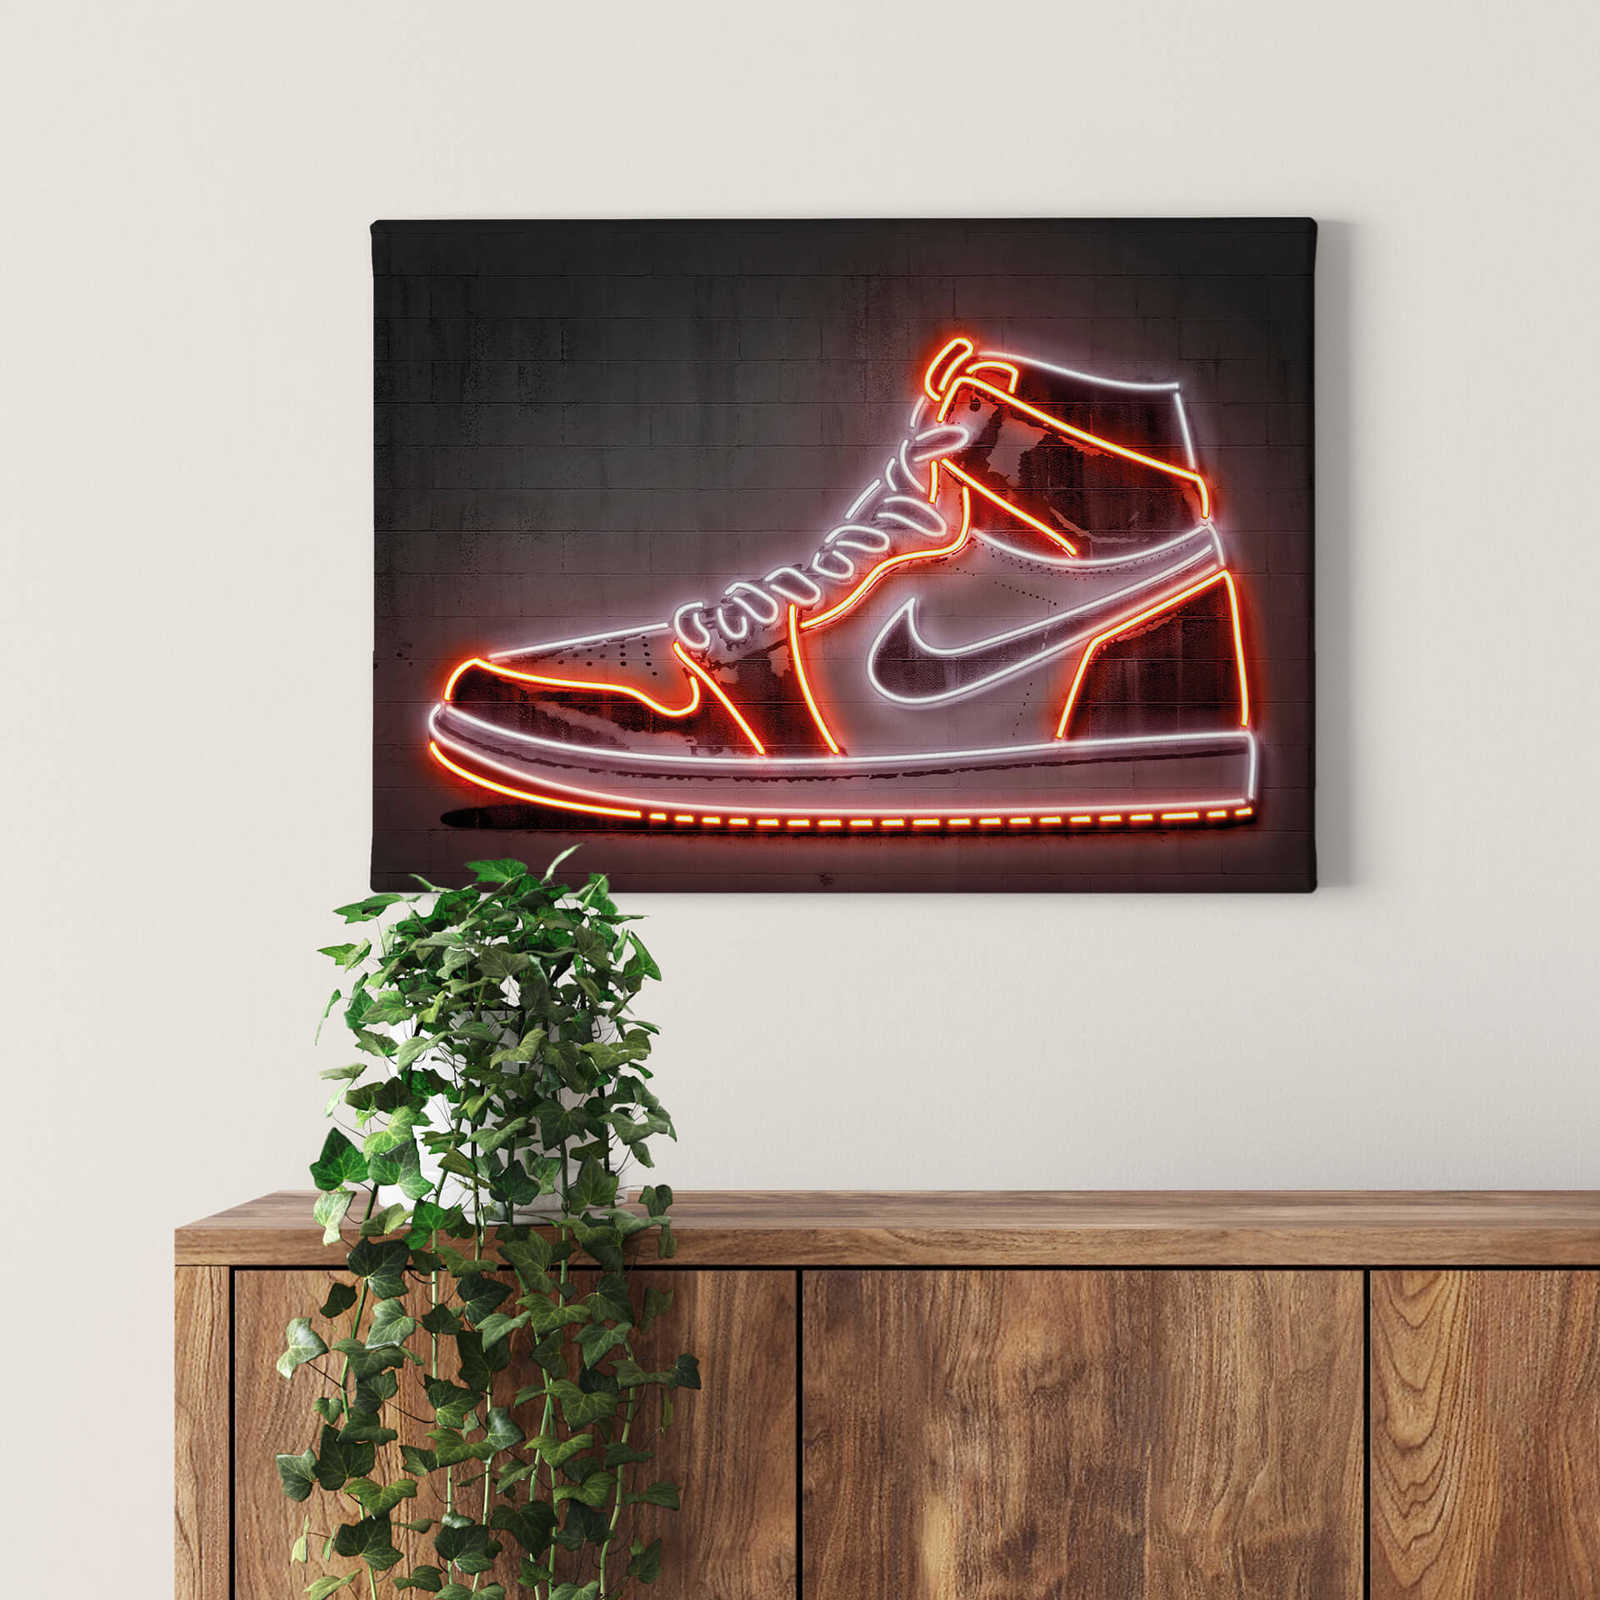             Cuadro Neon sign "Sneaker" by Mielu - 0,70 m x 0,50 m
        